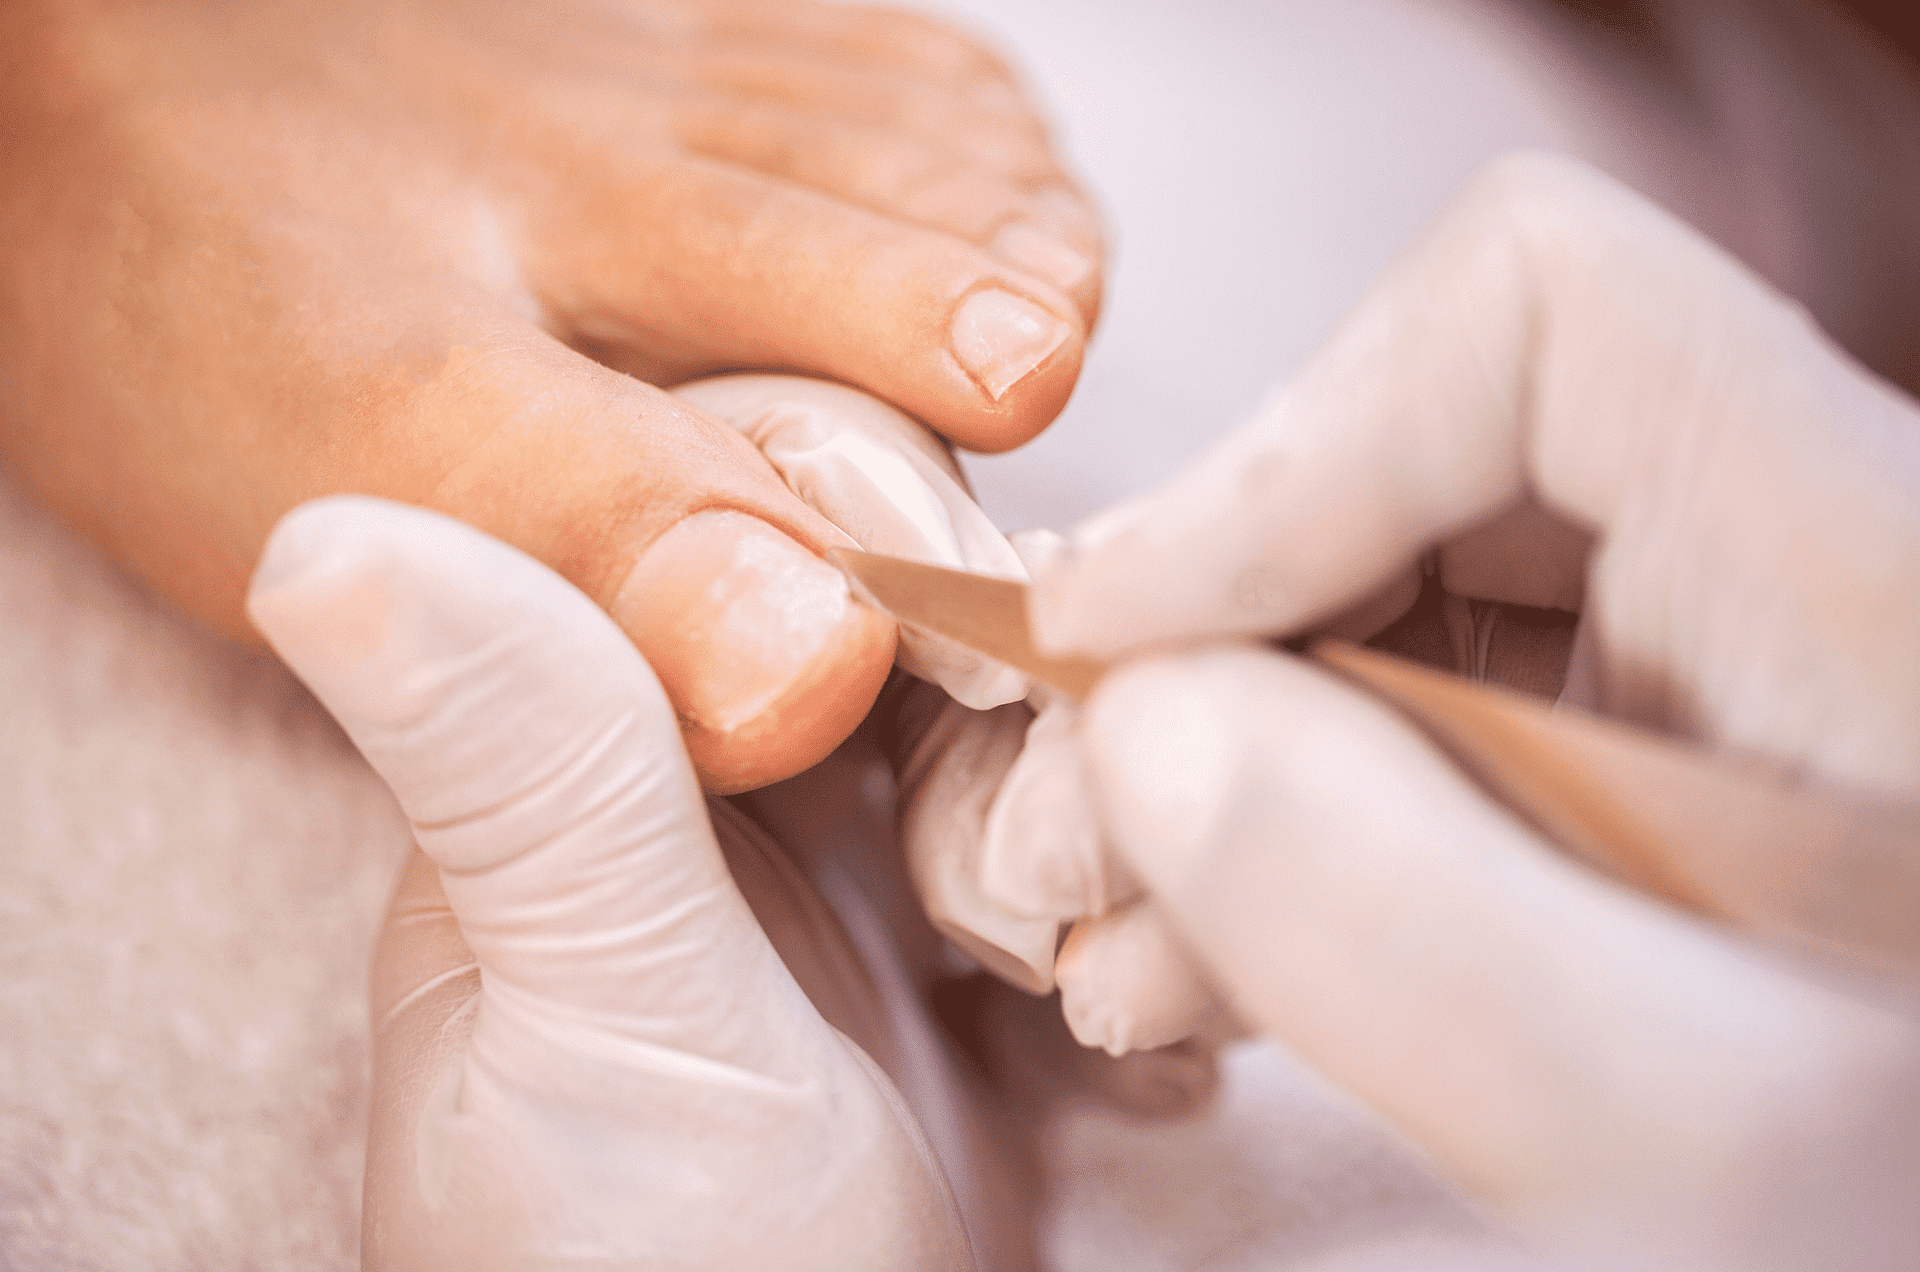 Professional working on an ingrown toe nail